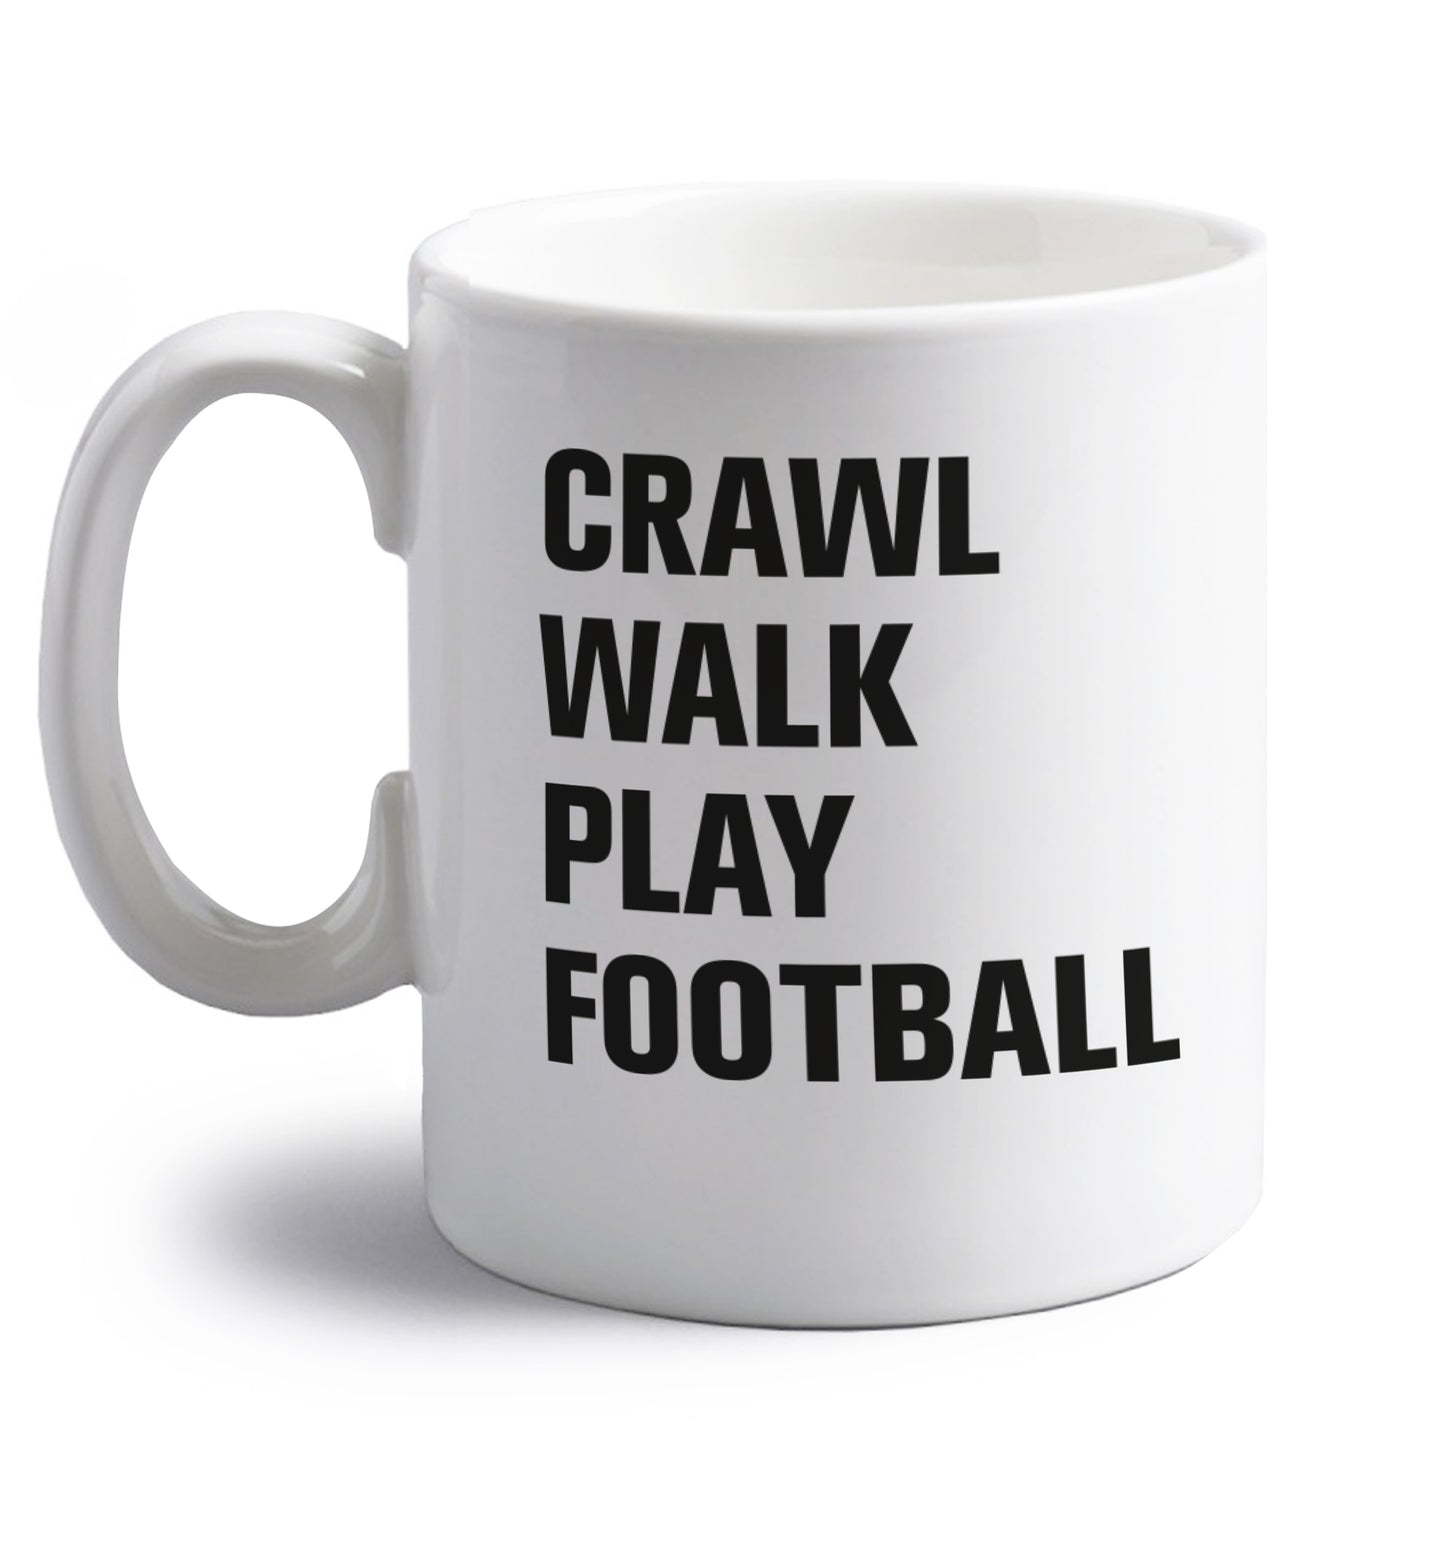 Crawl, walk, play football right handed white ceramic mug 